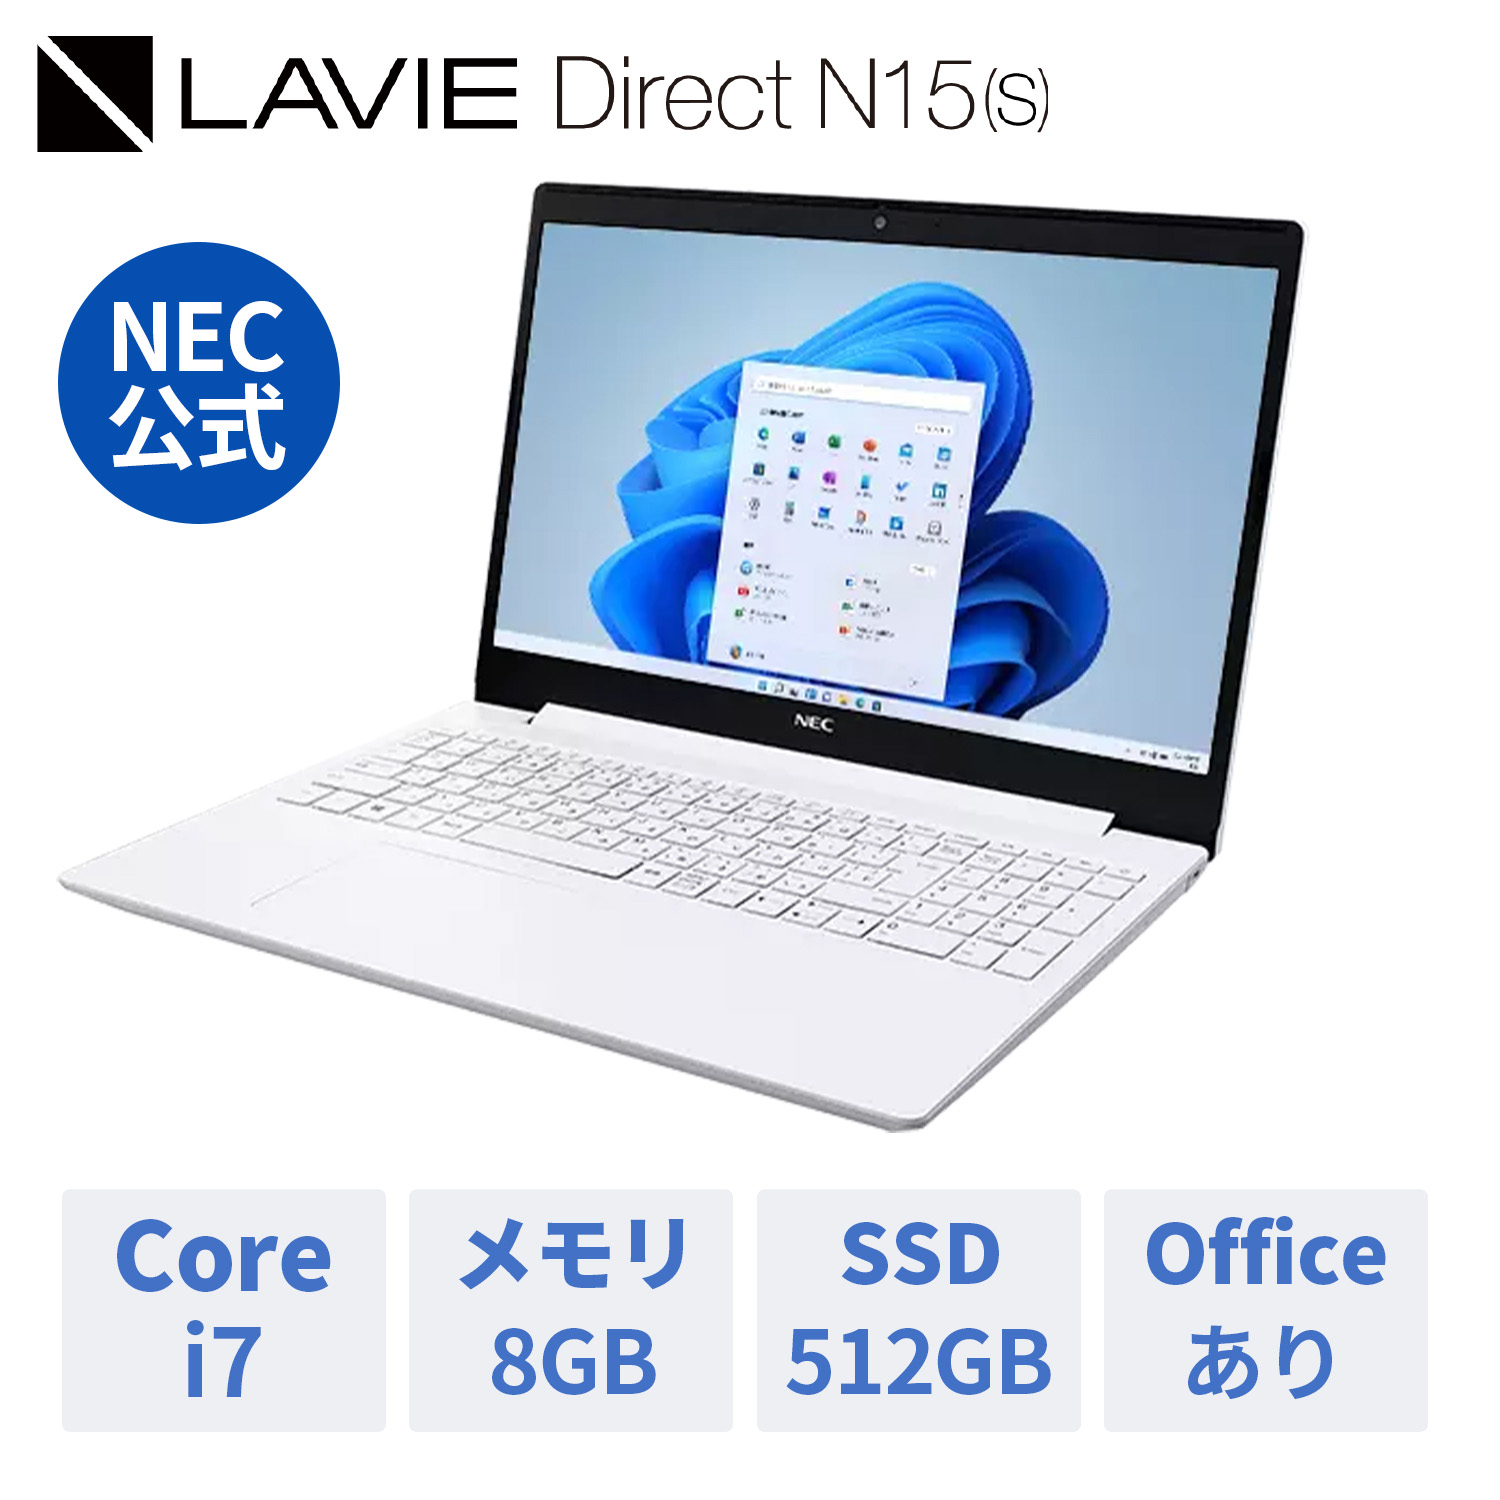 NECノートパソコンcore i7 8G SSD Windows11オフィス付き-